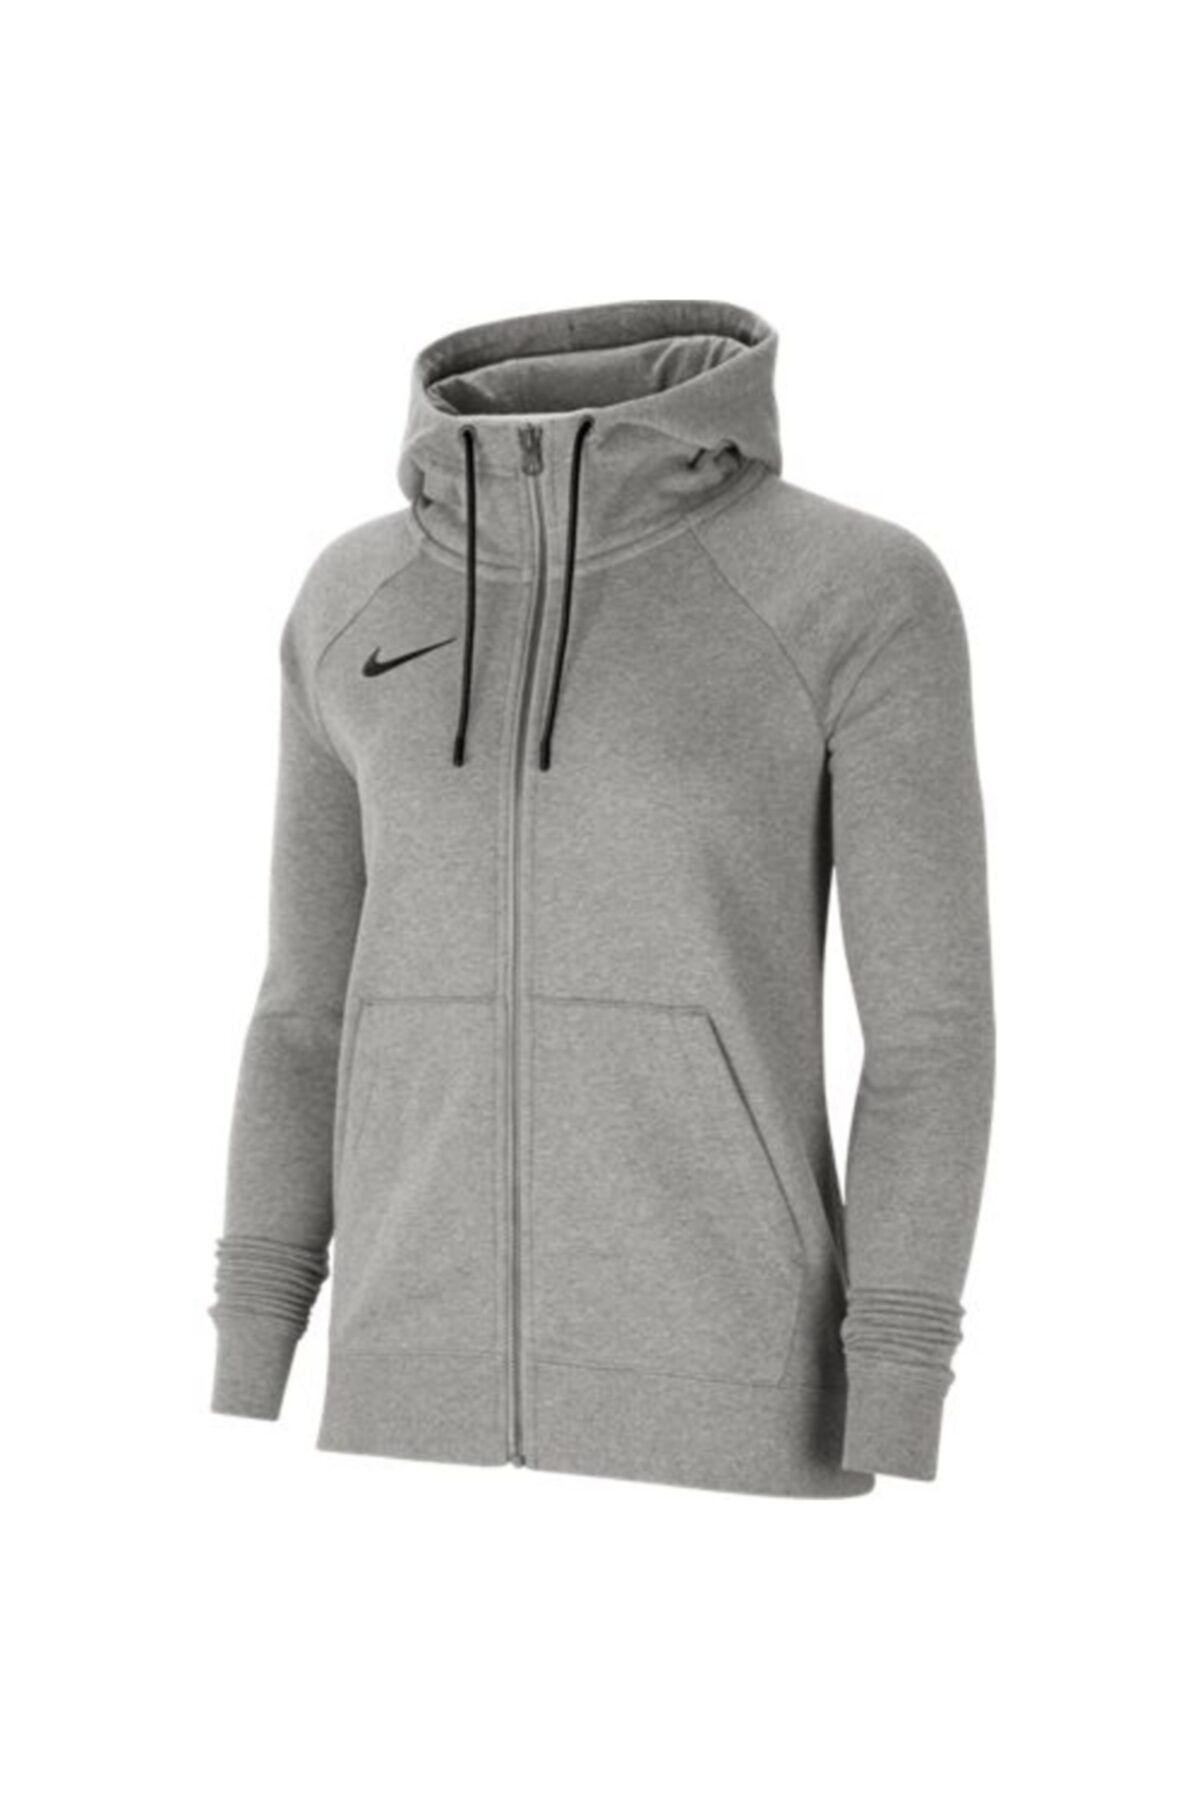 Nike Dry Park 20 Gri Kadın Kapüşonlu Sweatshirt - Cw6955-063